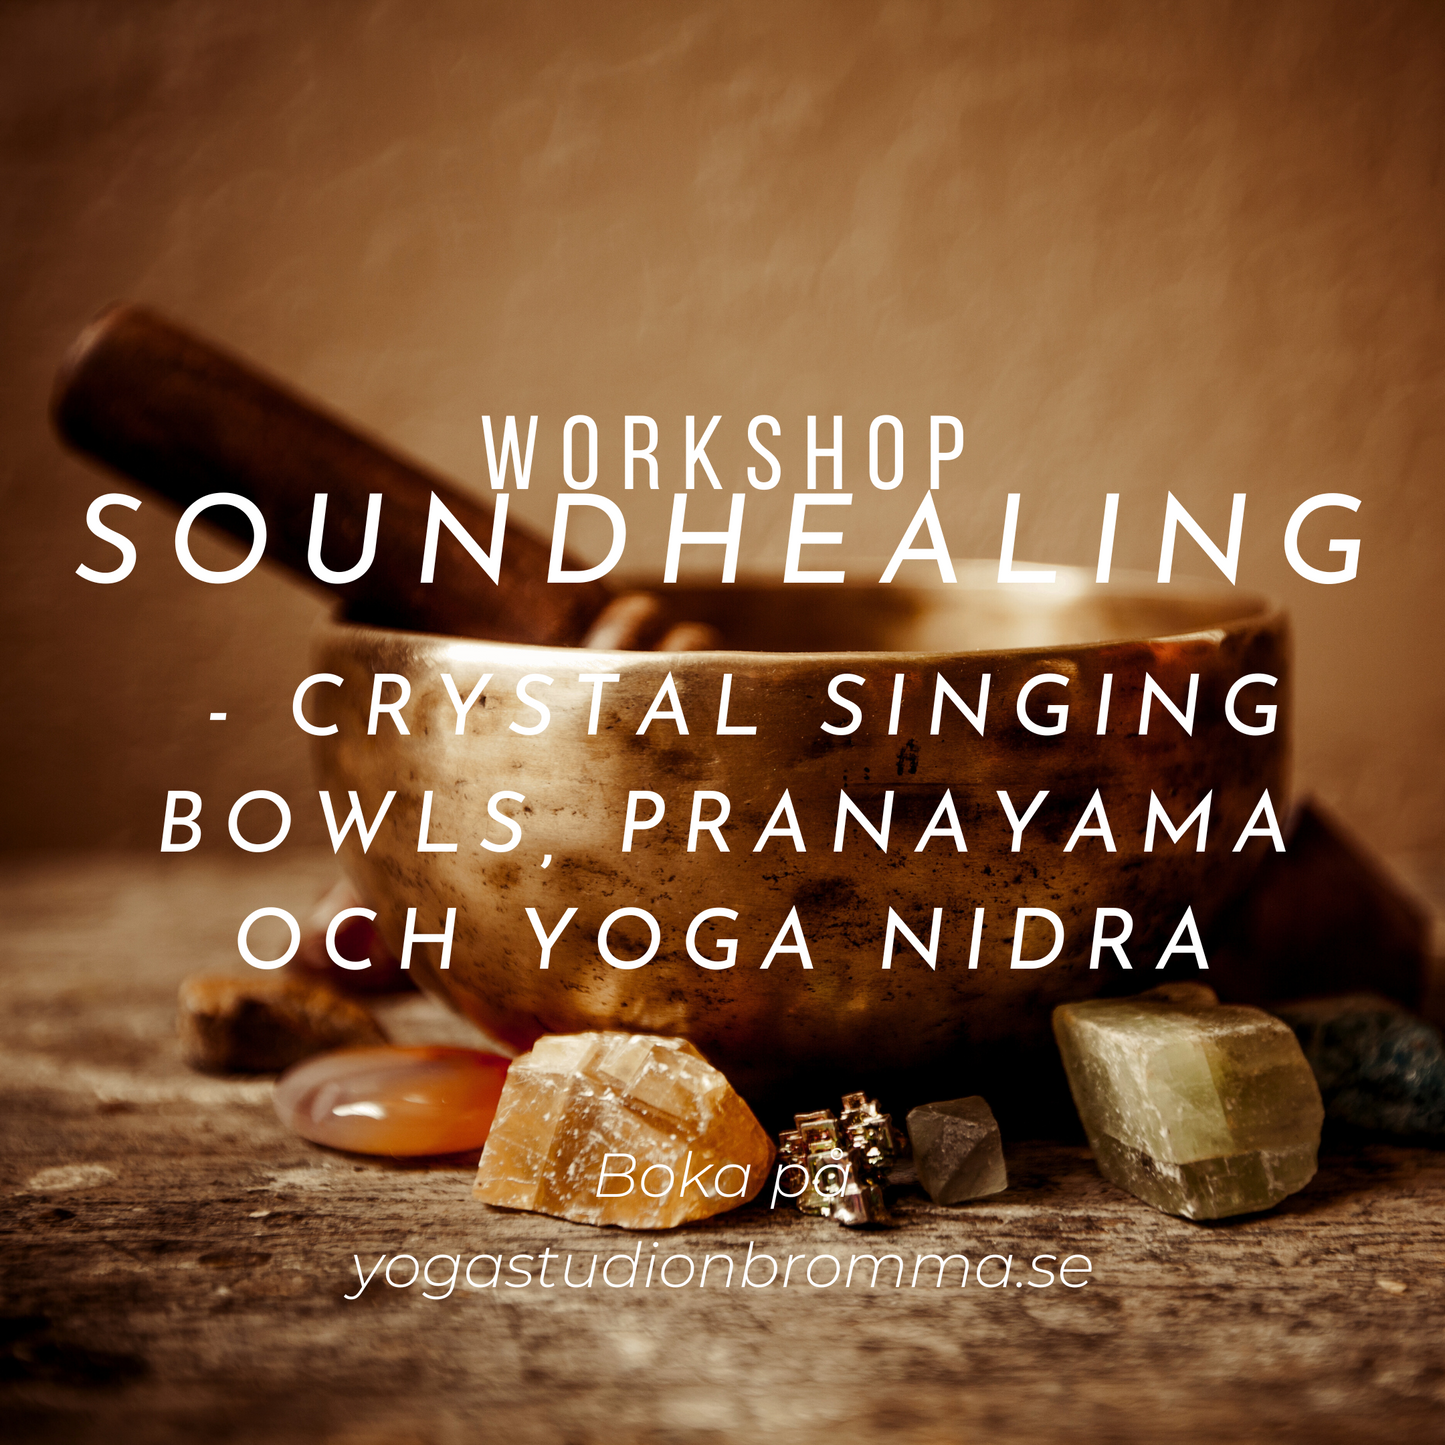 Soundhealing med crystal singing bowls, pranayama och yoga nidra - 18/11